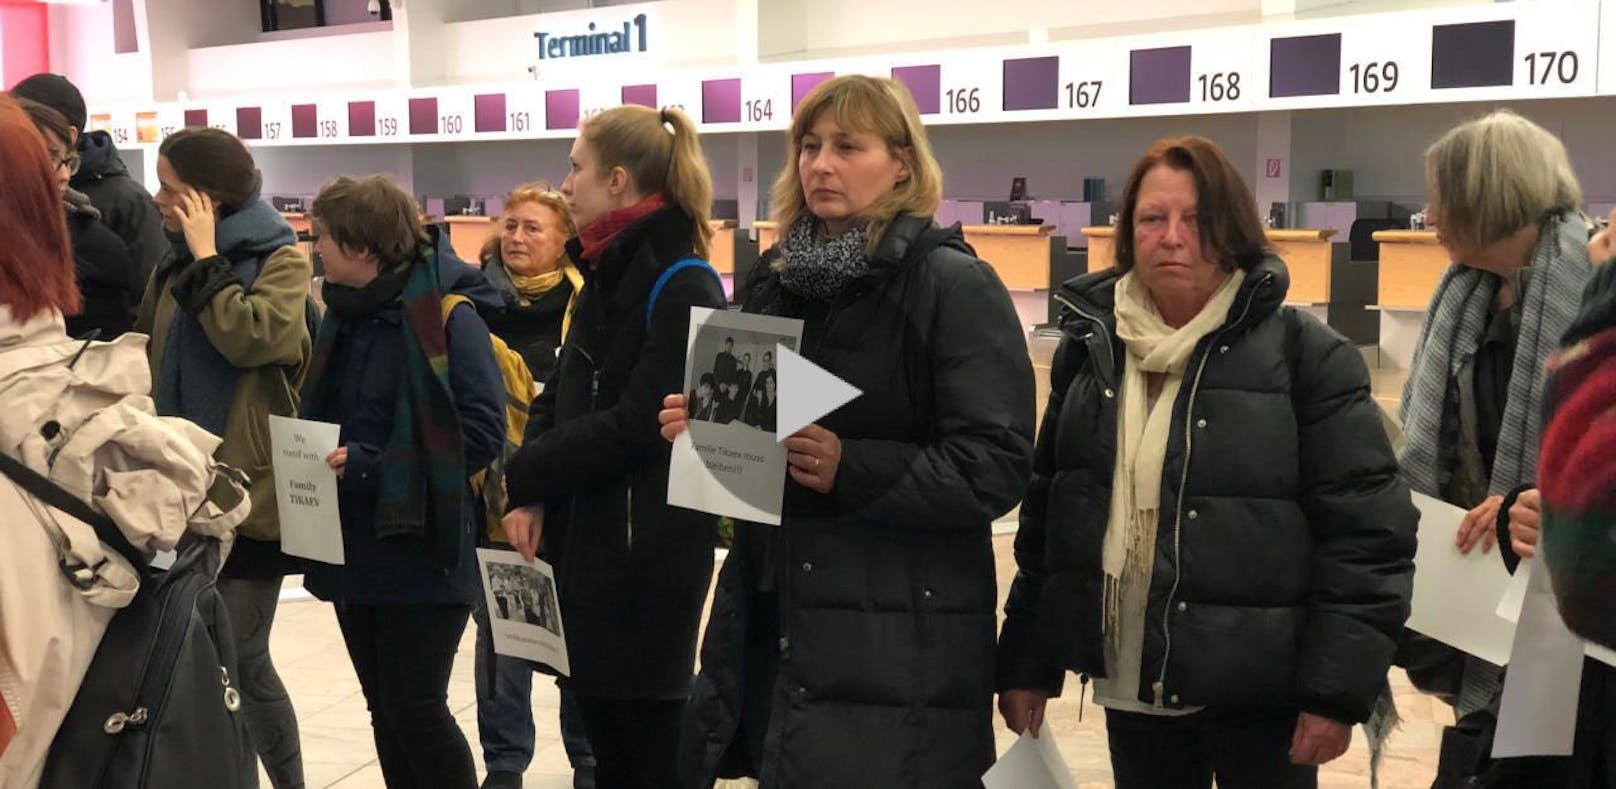 Familie abgeschoben: Protest am Airport